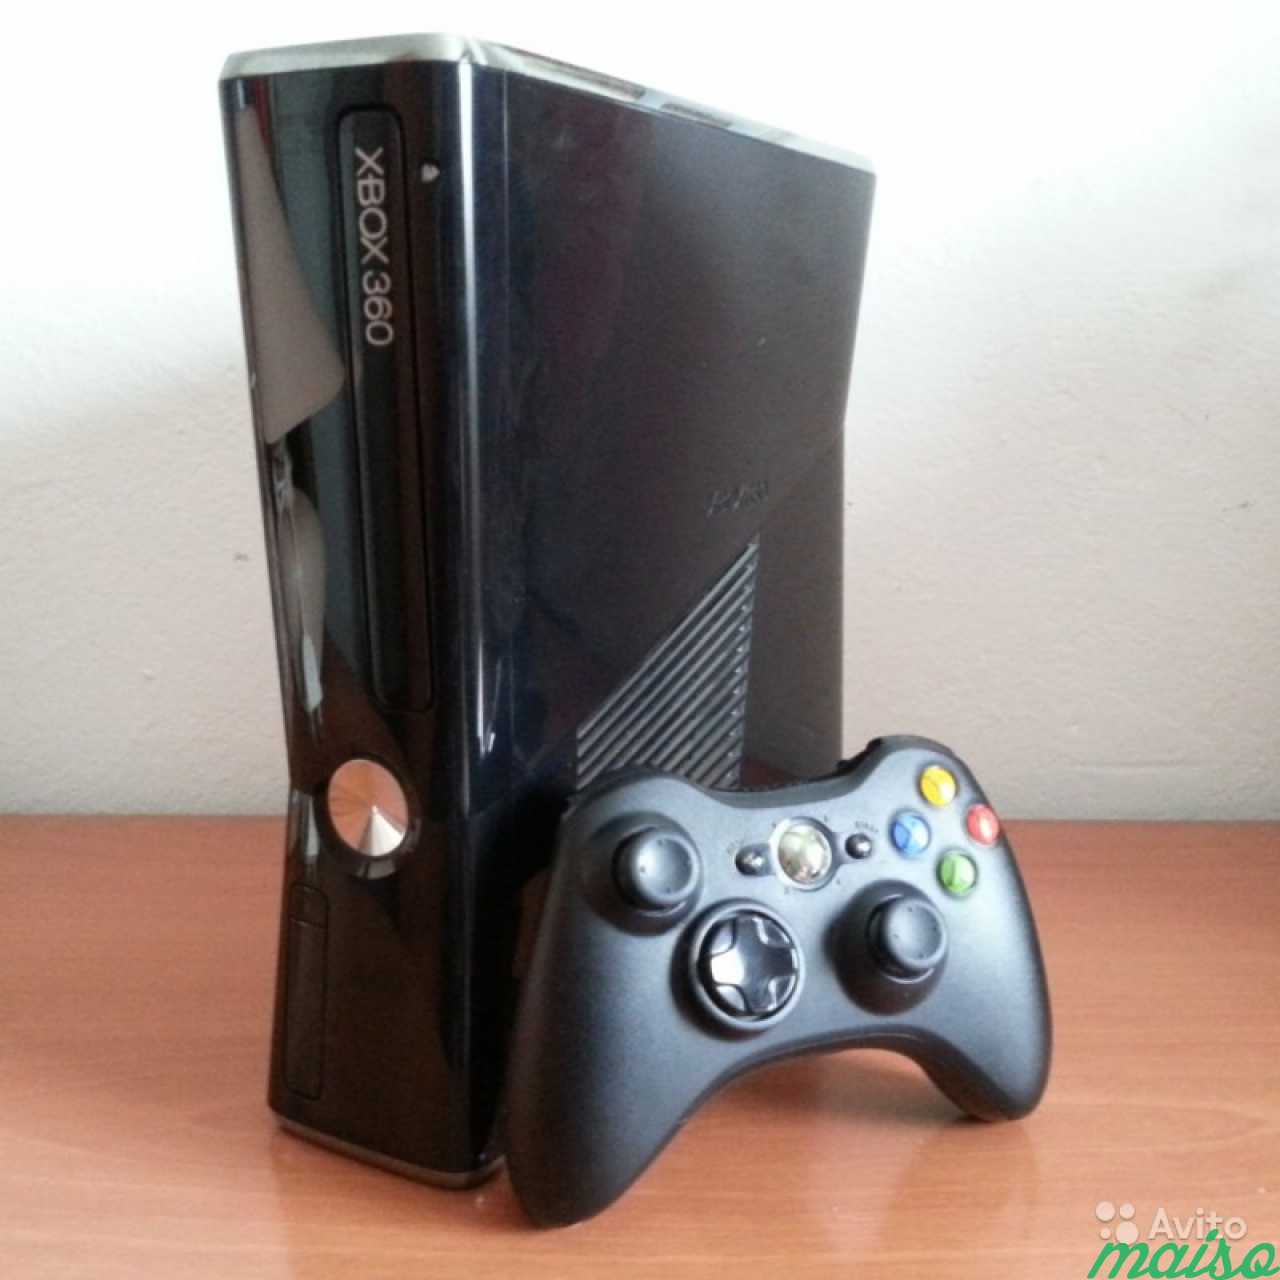 Хбох фрибут. Xbox 360 Slim. Xbox 360 Slim freeboot. Xbox 360 Slim 250gb. Xbox 360 Slim 360.